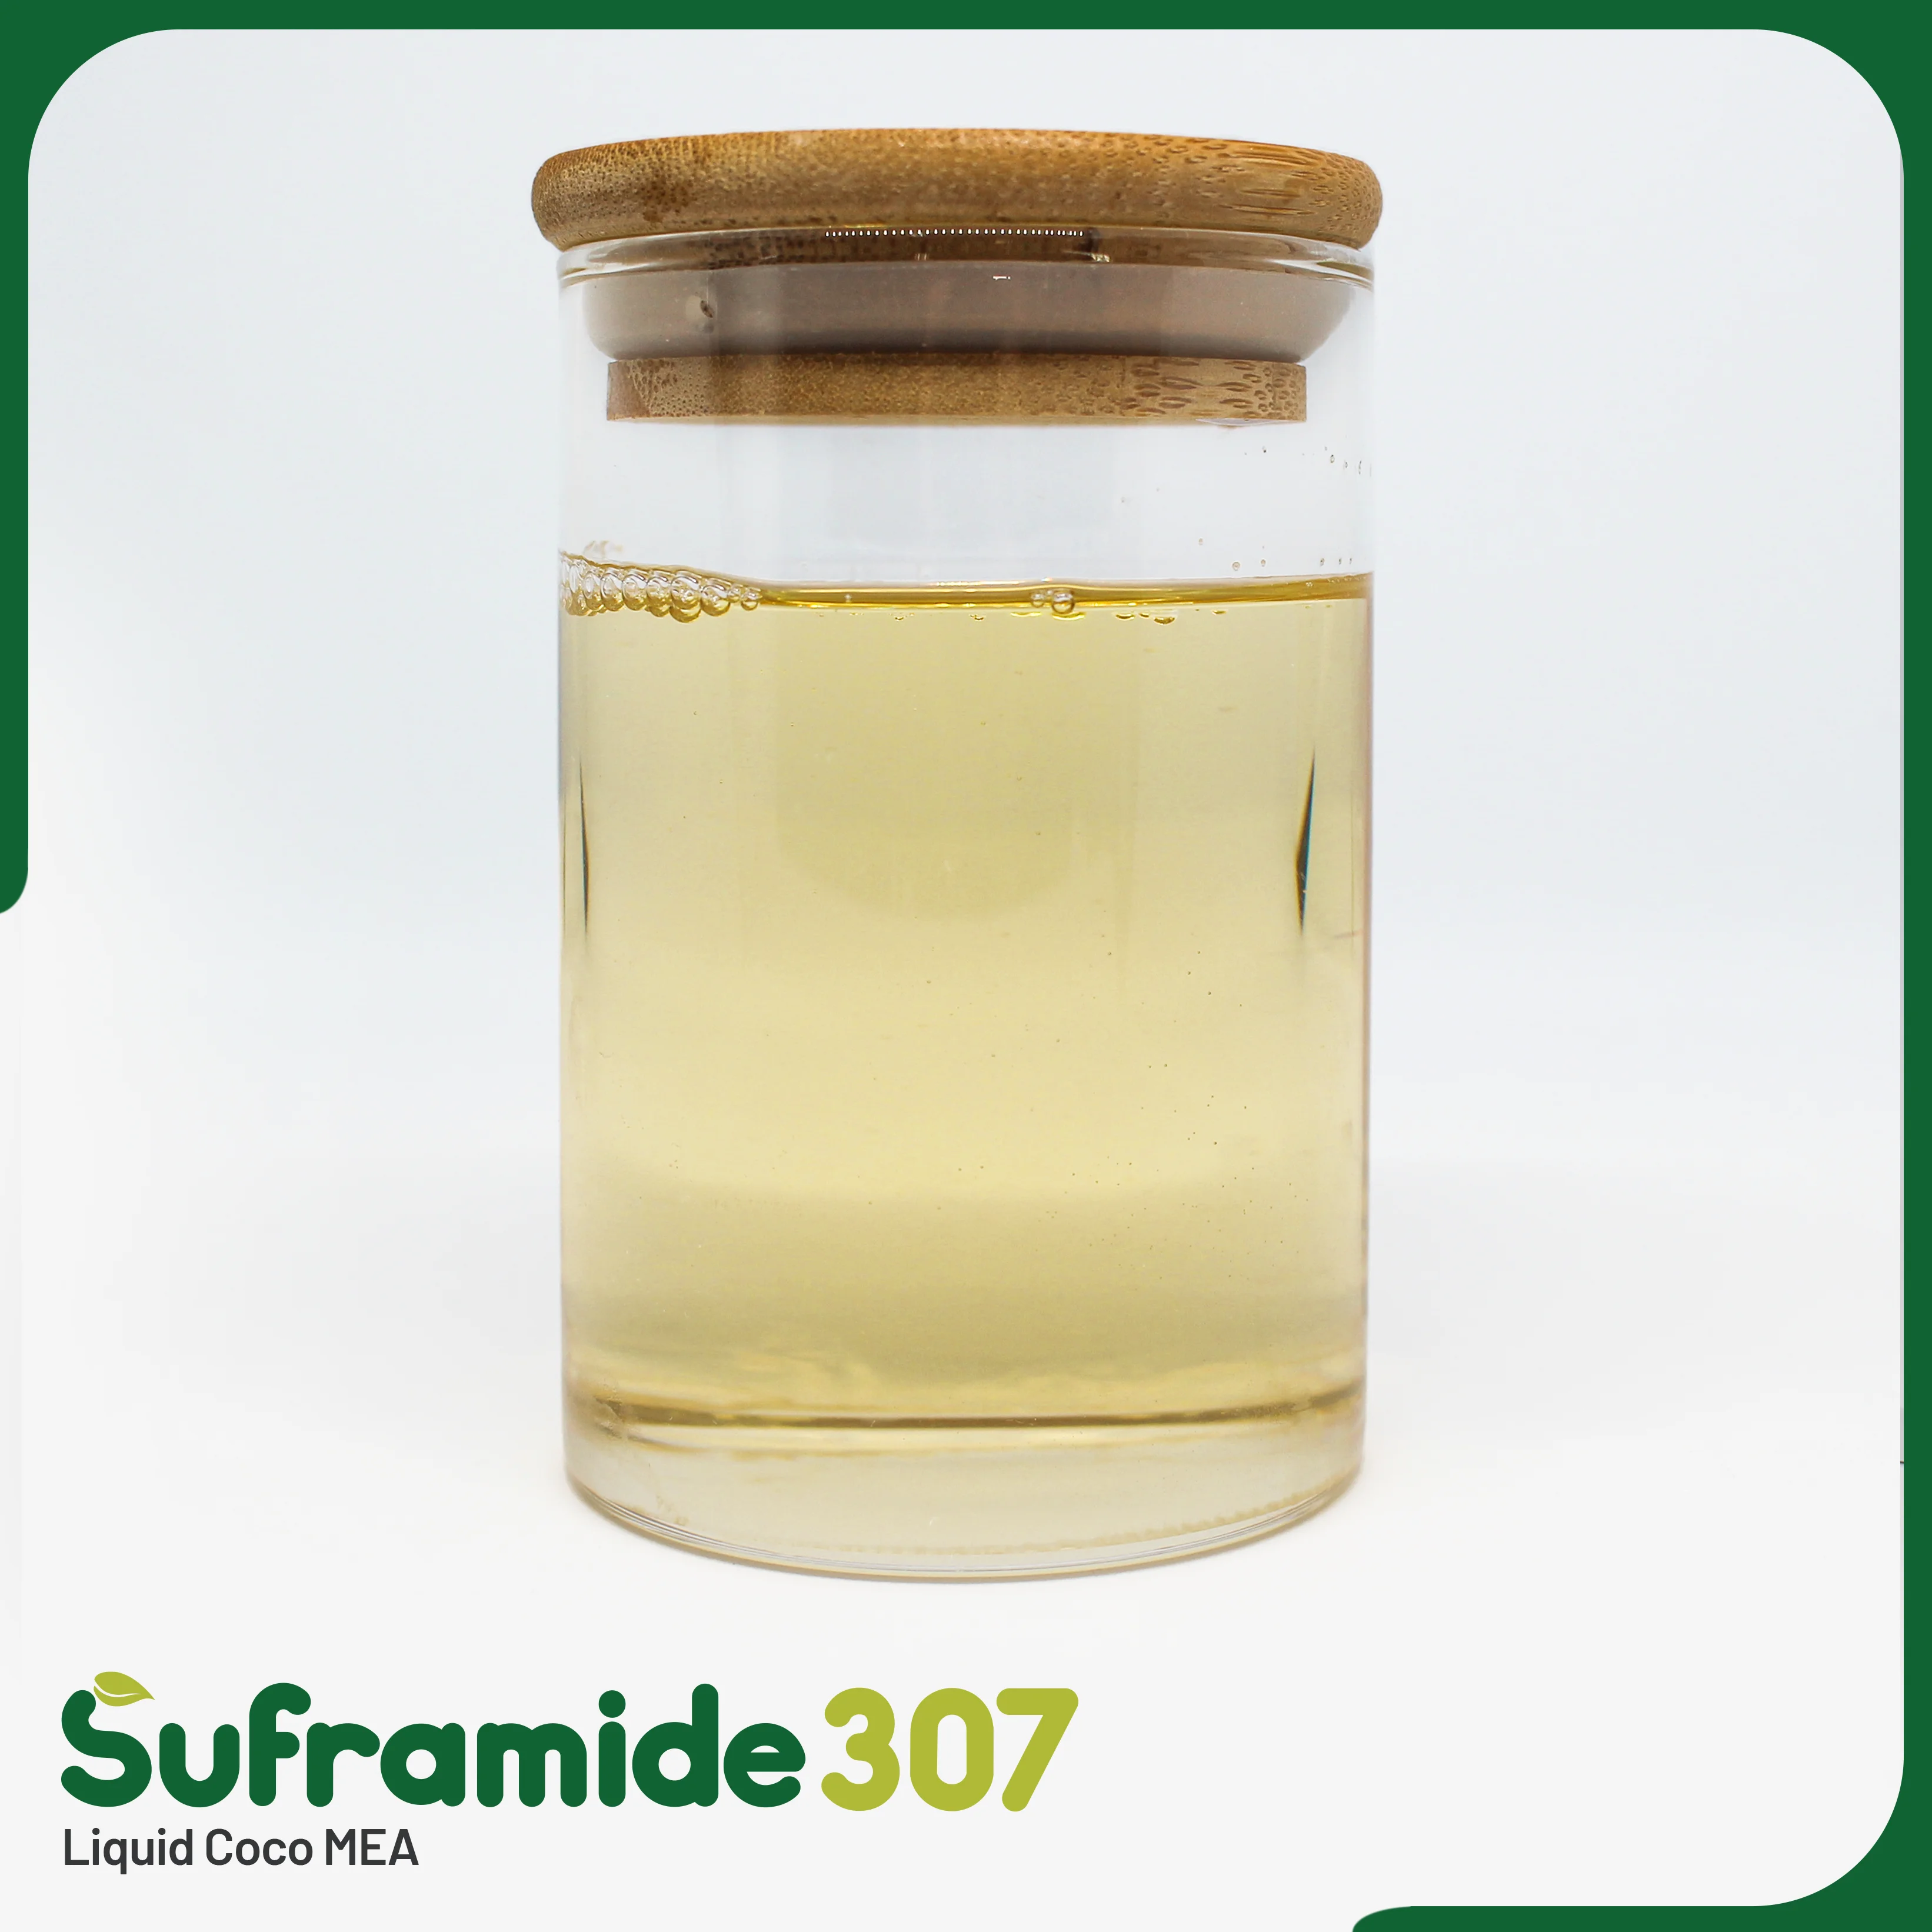 Suframide-307